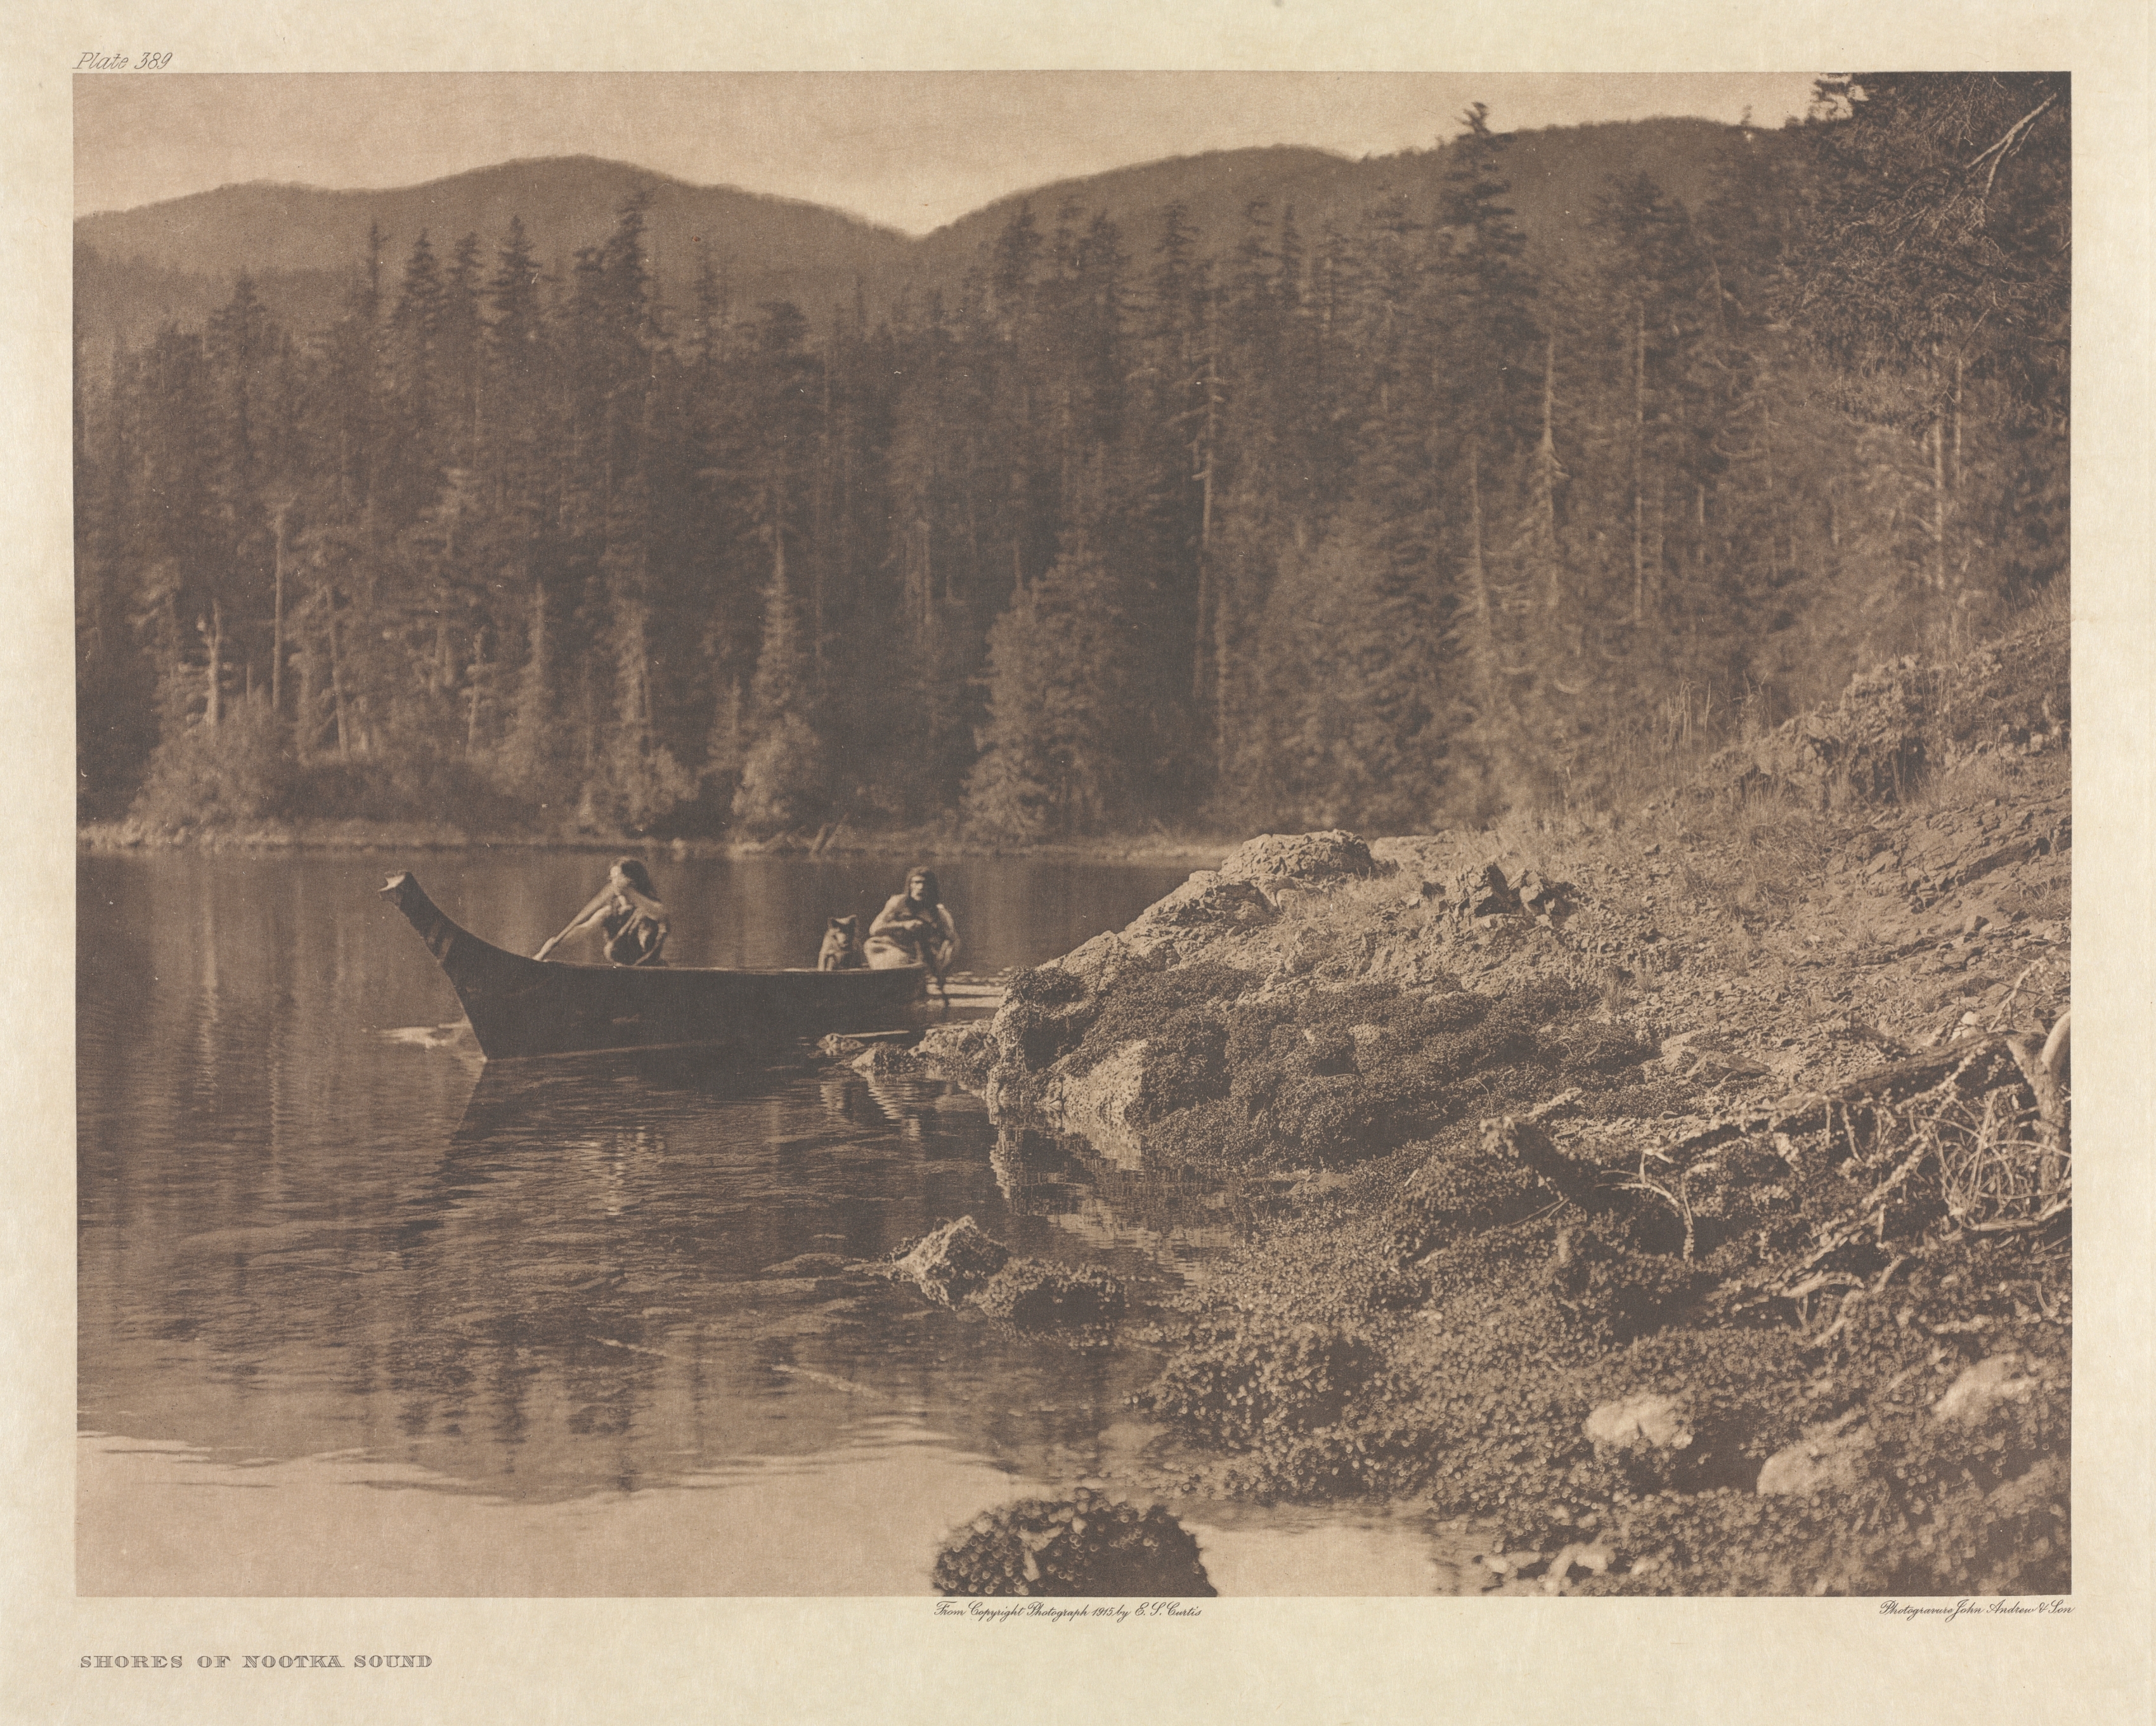 Portfolio XI, Plate 389: Shores of Nootka Sound